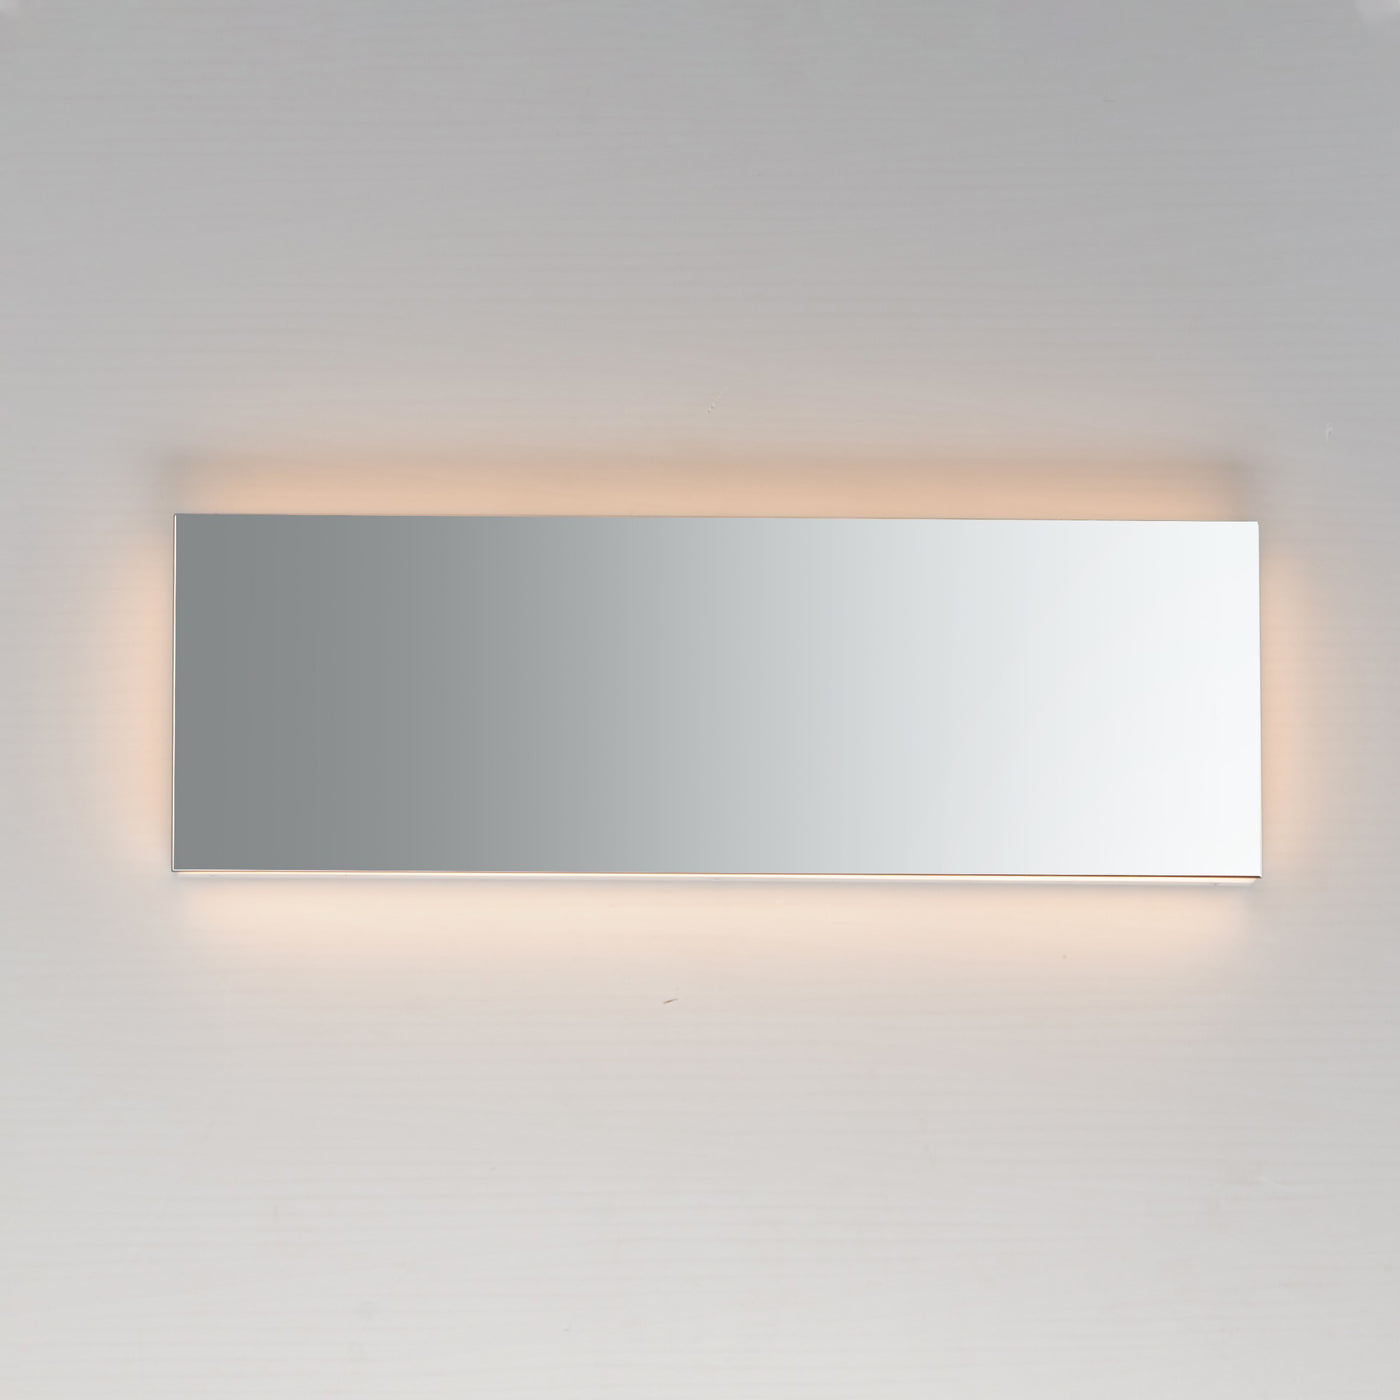 LED Mirror Finish Frame with Acrylic Diffuser Rectangular Vanity Light